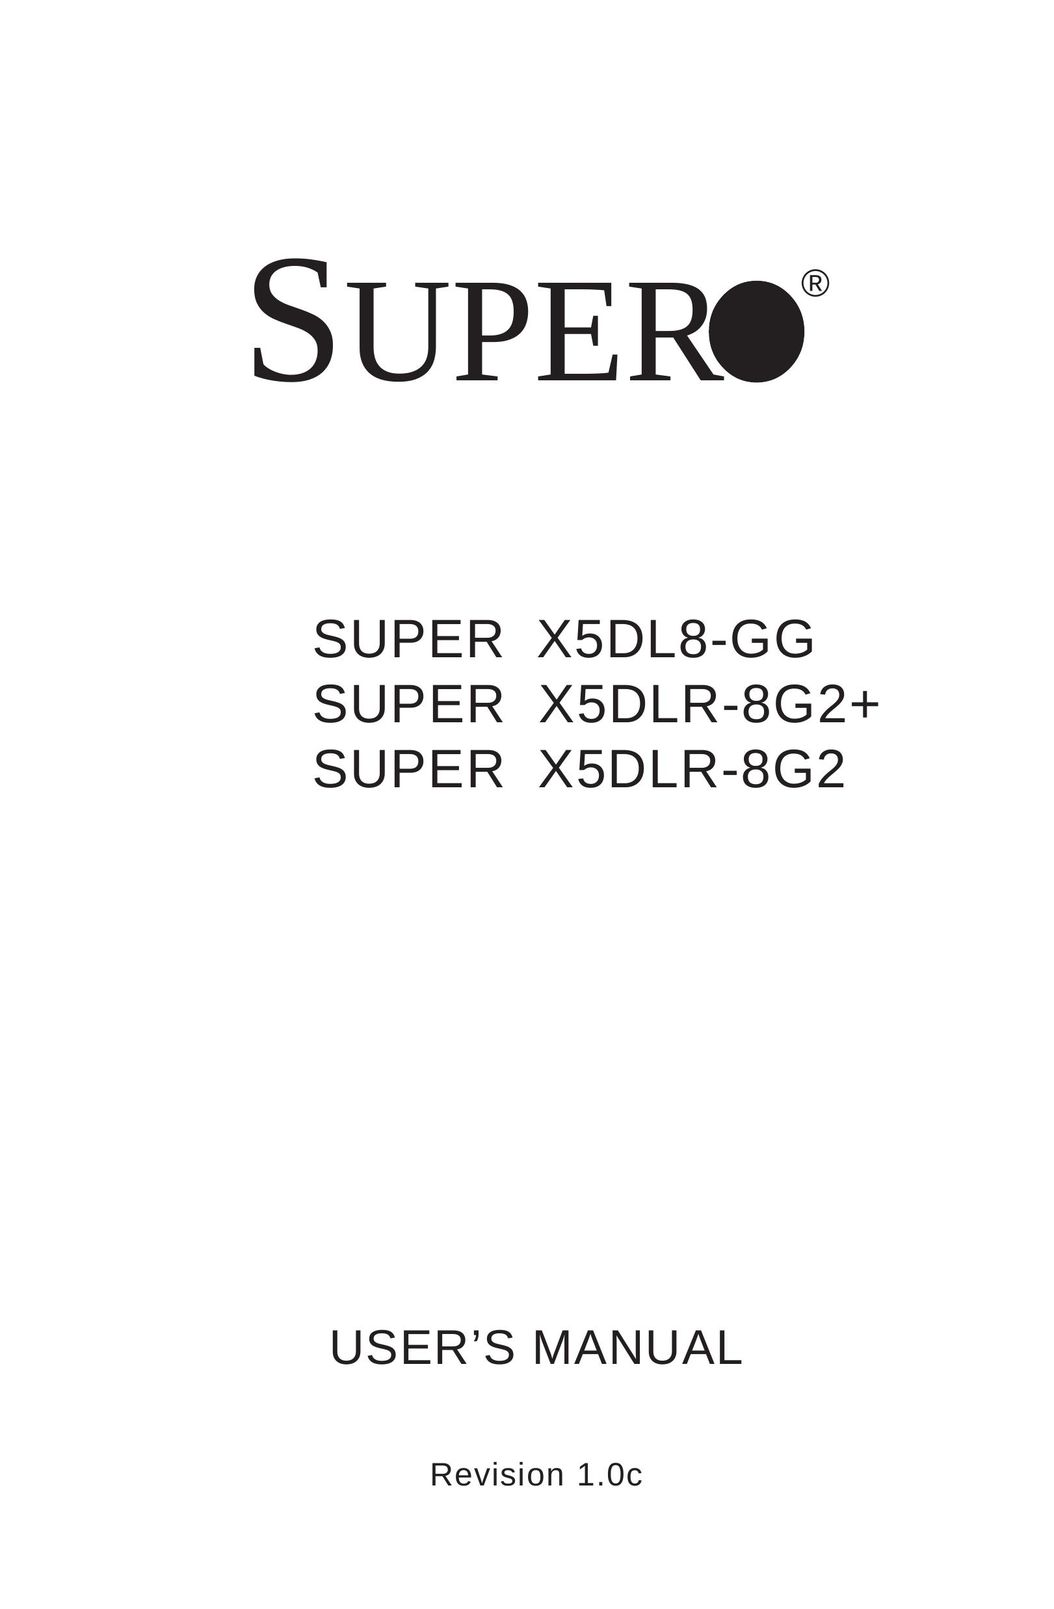 SUPER MICRO Computer SUPER X5DL8-GG Computer Hardware User Manual